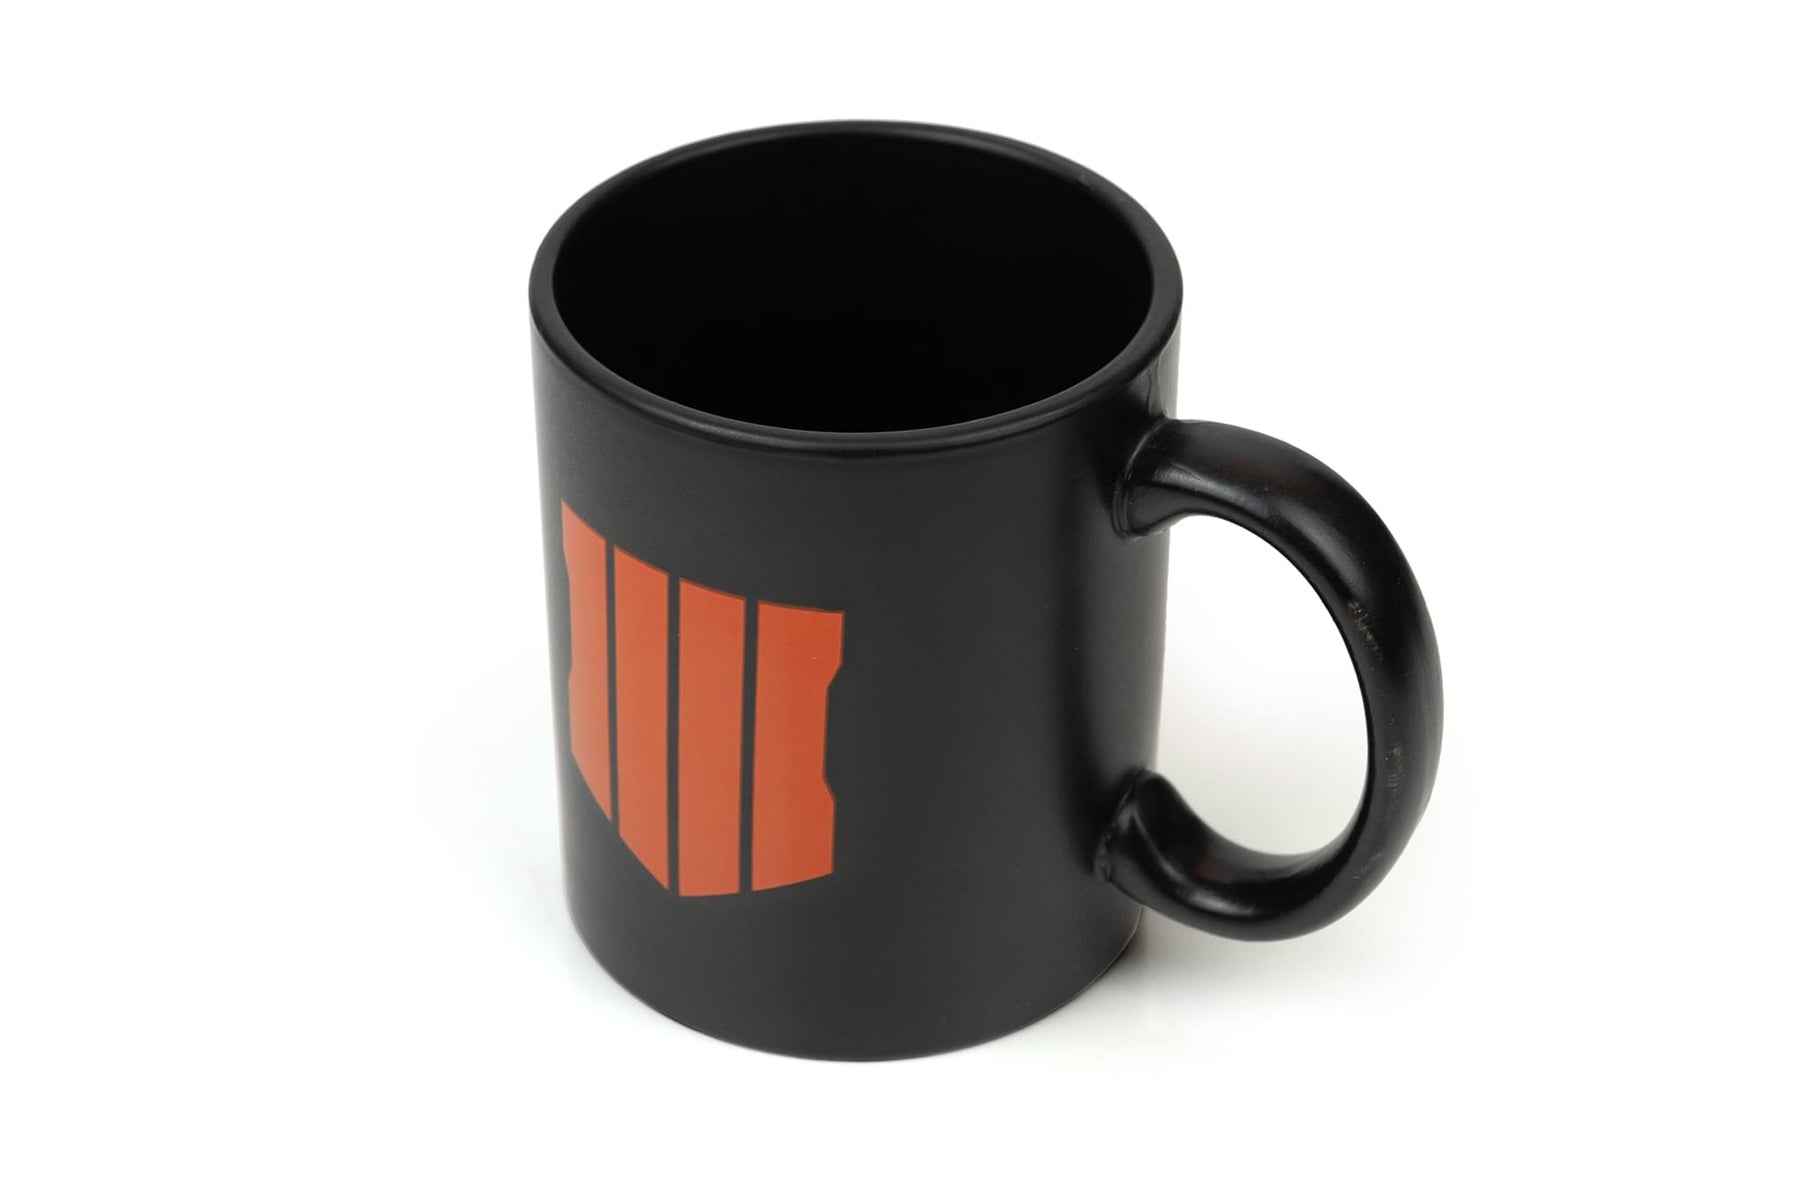 Call of Duty: Black Ops 4 Shield Icon Ceramic Coffee Mug | Holds 12 Ounces